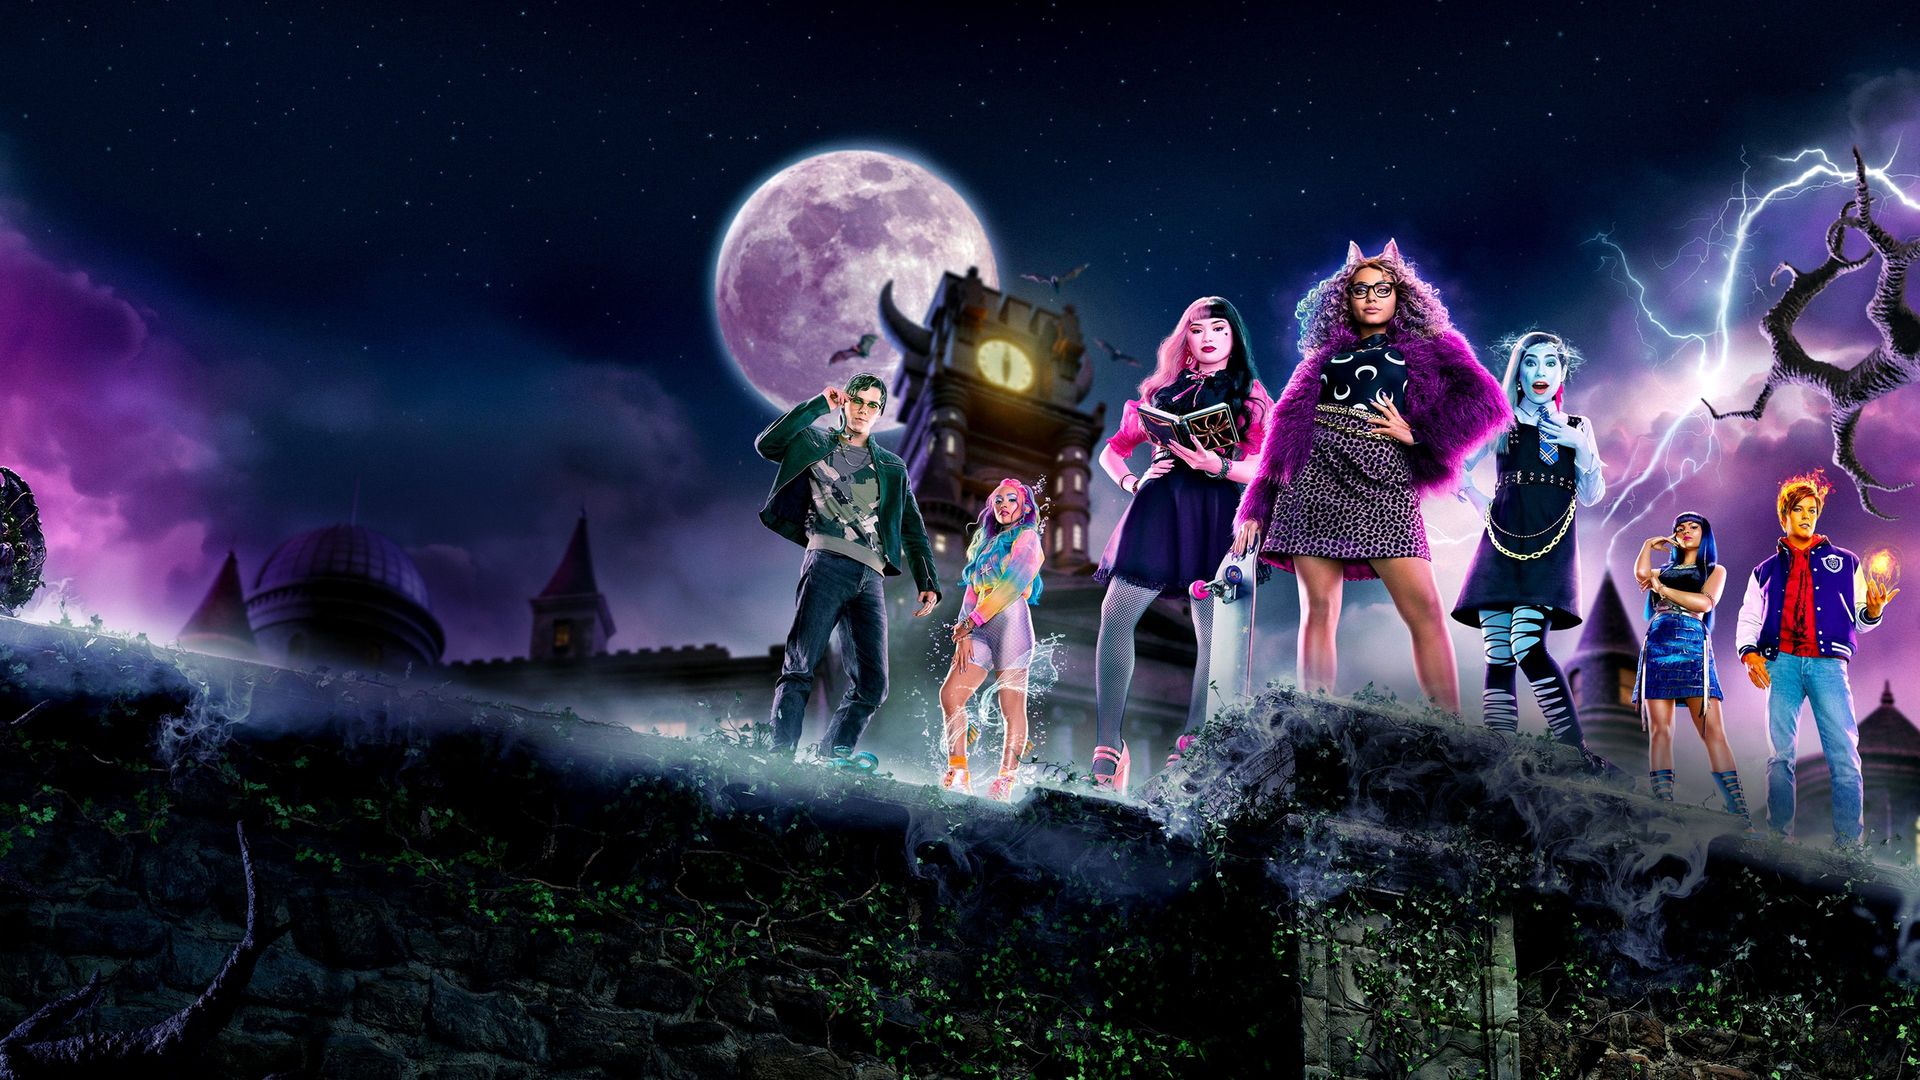 Monster High (TV Series 2022– ) - IMDb